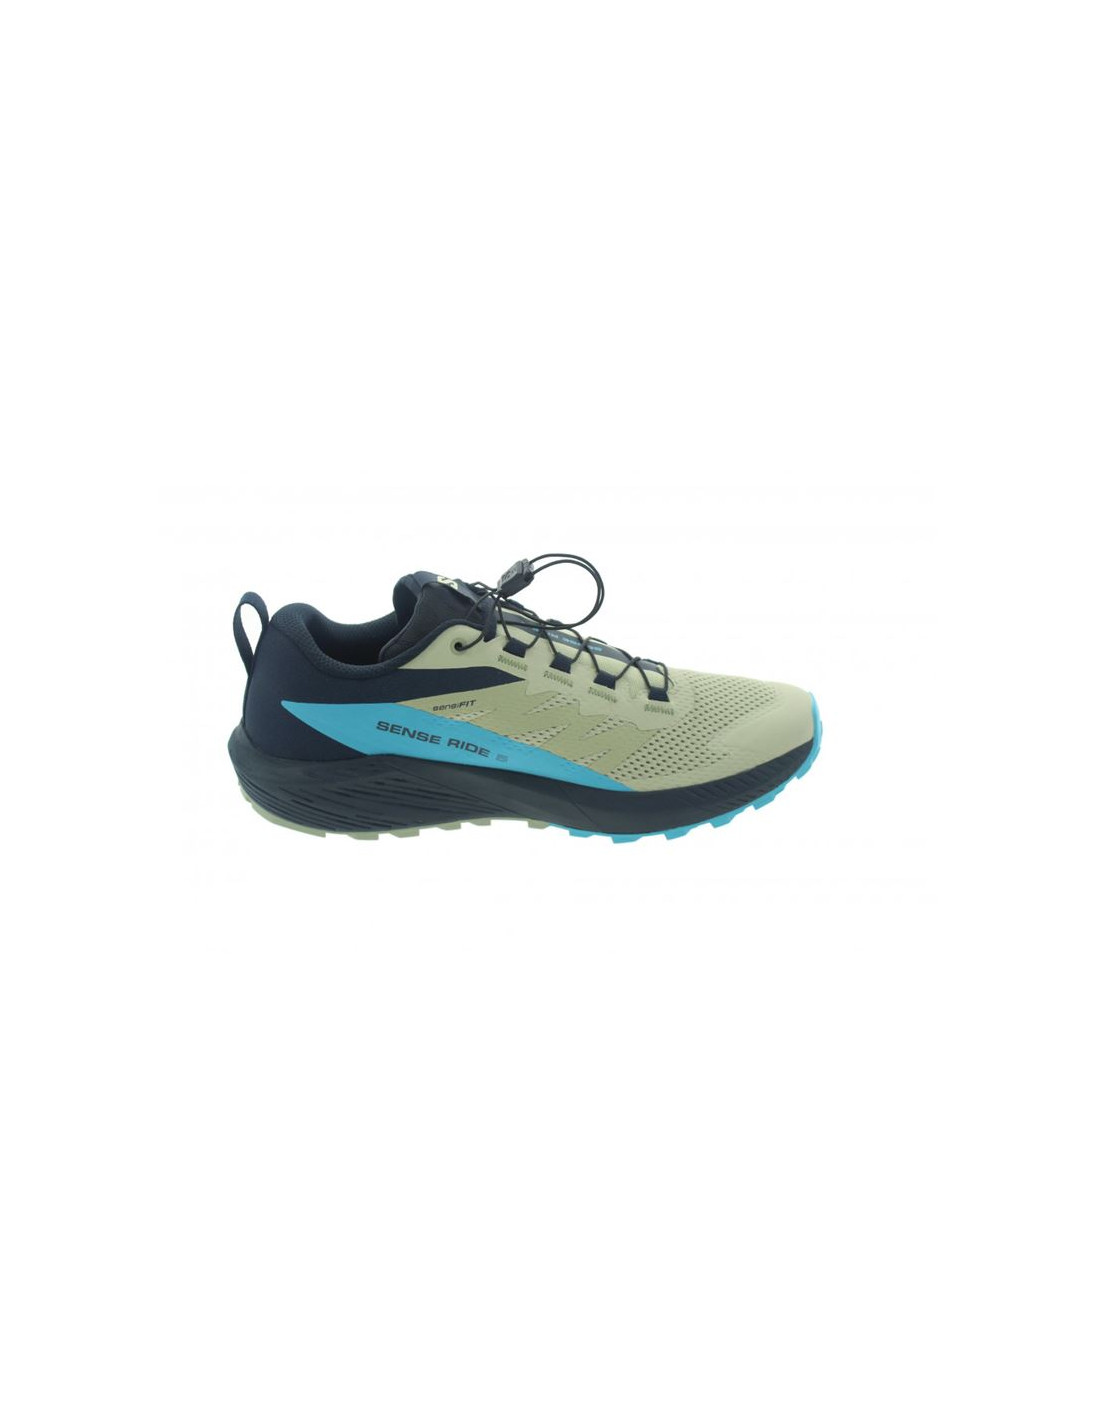 Chaussures de Trail Running Marine/Vert Salomon Goretex